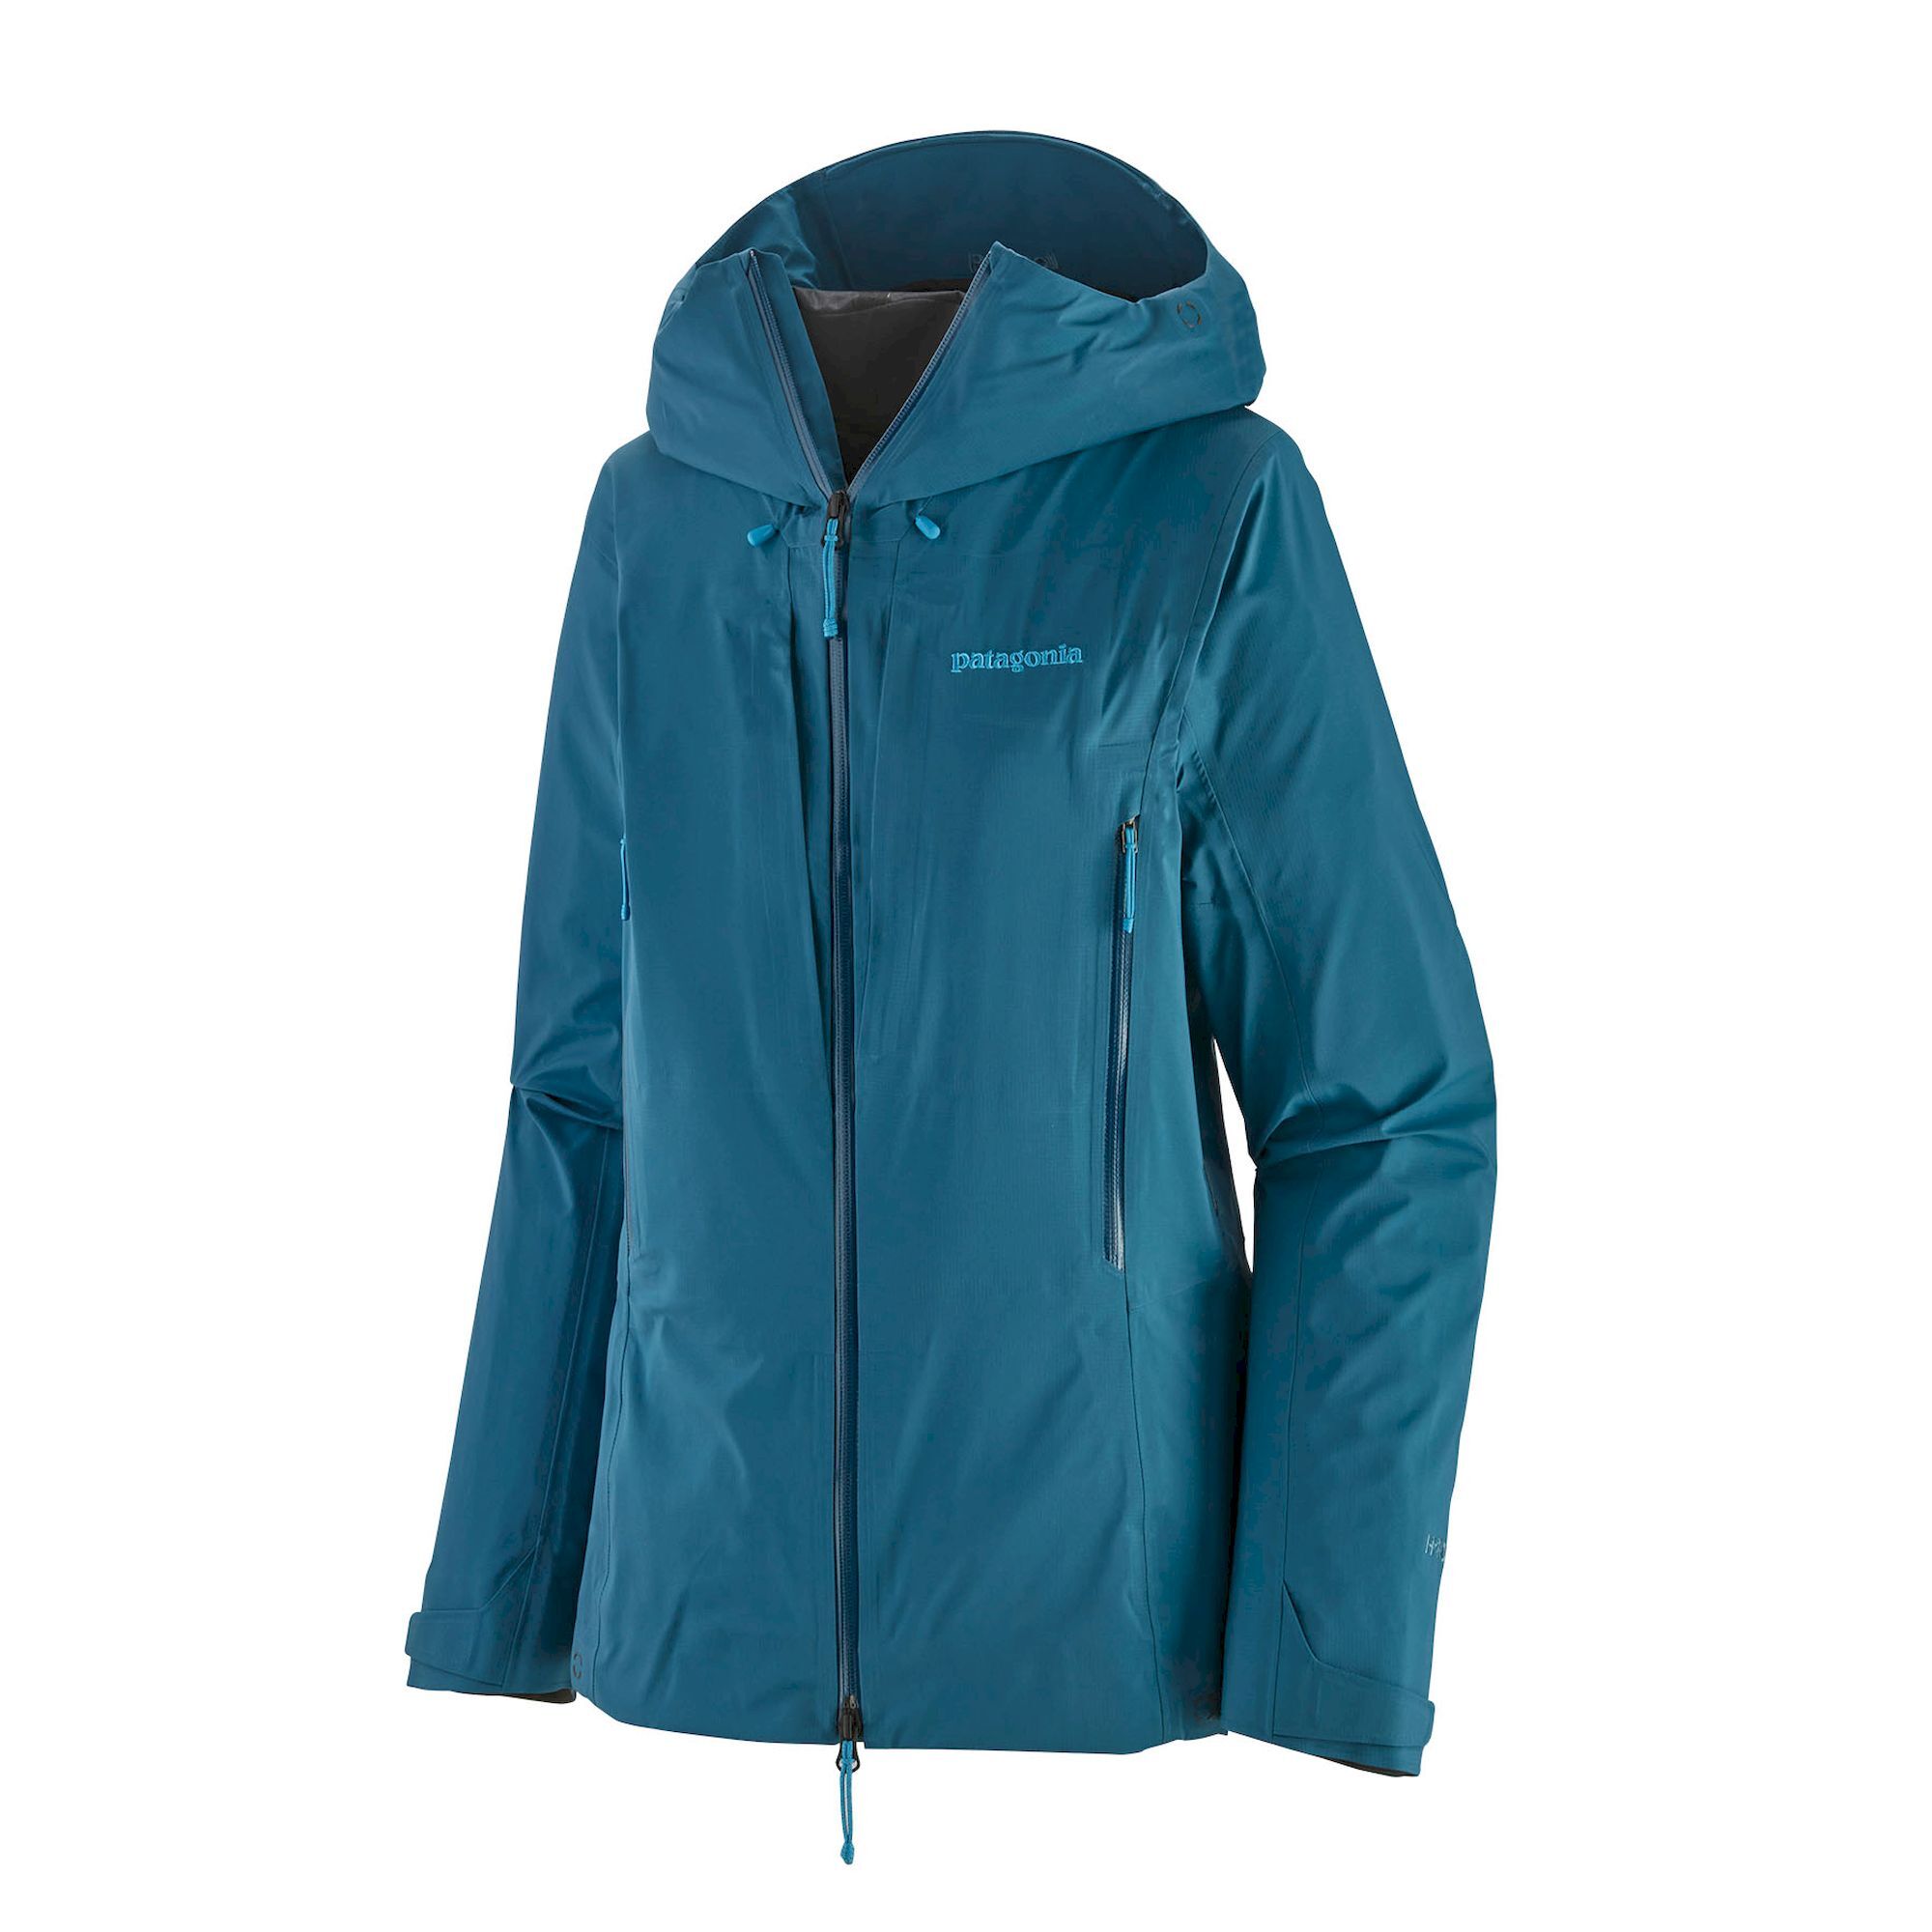 Patagonia Dual Aspect Jacket - Waterproof jacket - Women's